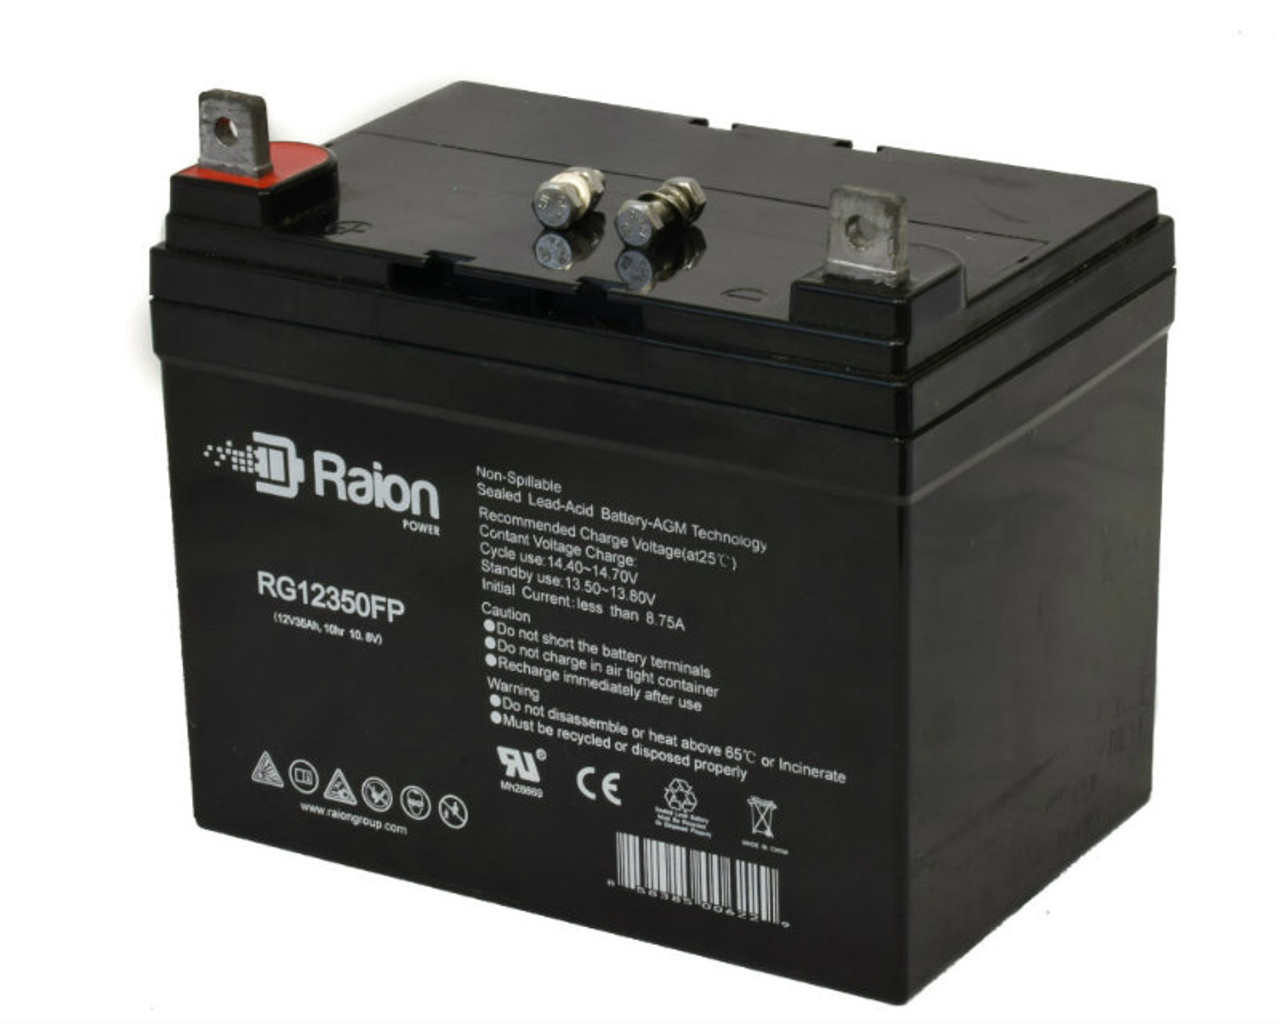 Raion Power Replacement 12V 35Ah Battery for Stinger SPV35 - 1 Pack